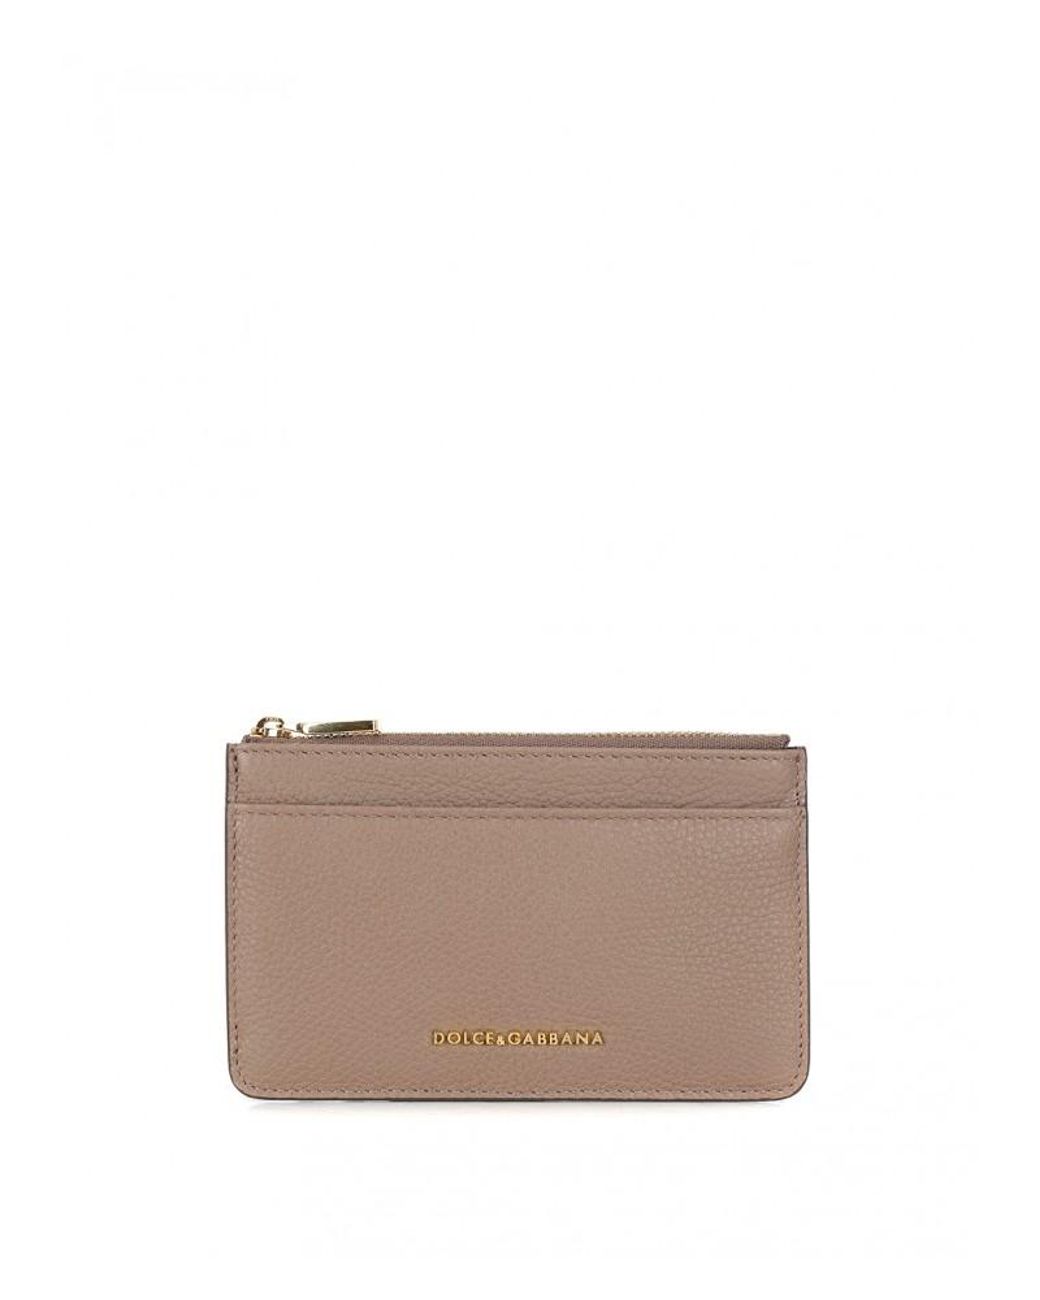 Dolce & Gabbana Leather Card Holder in Brown/Beige (Brown) - Lyst